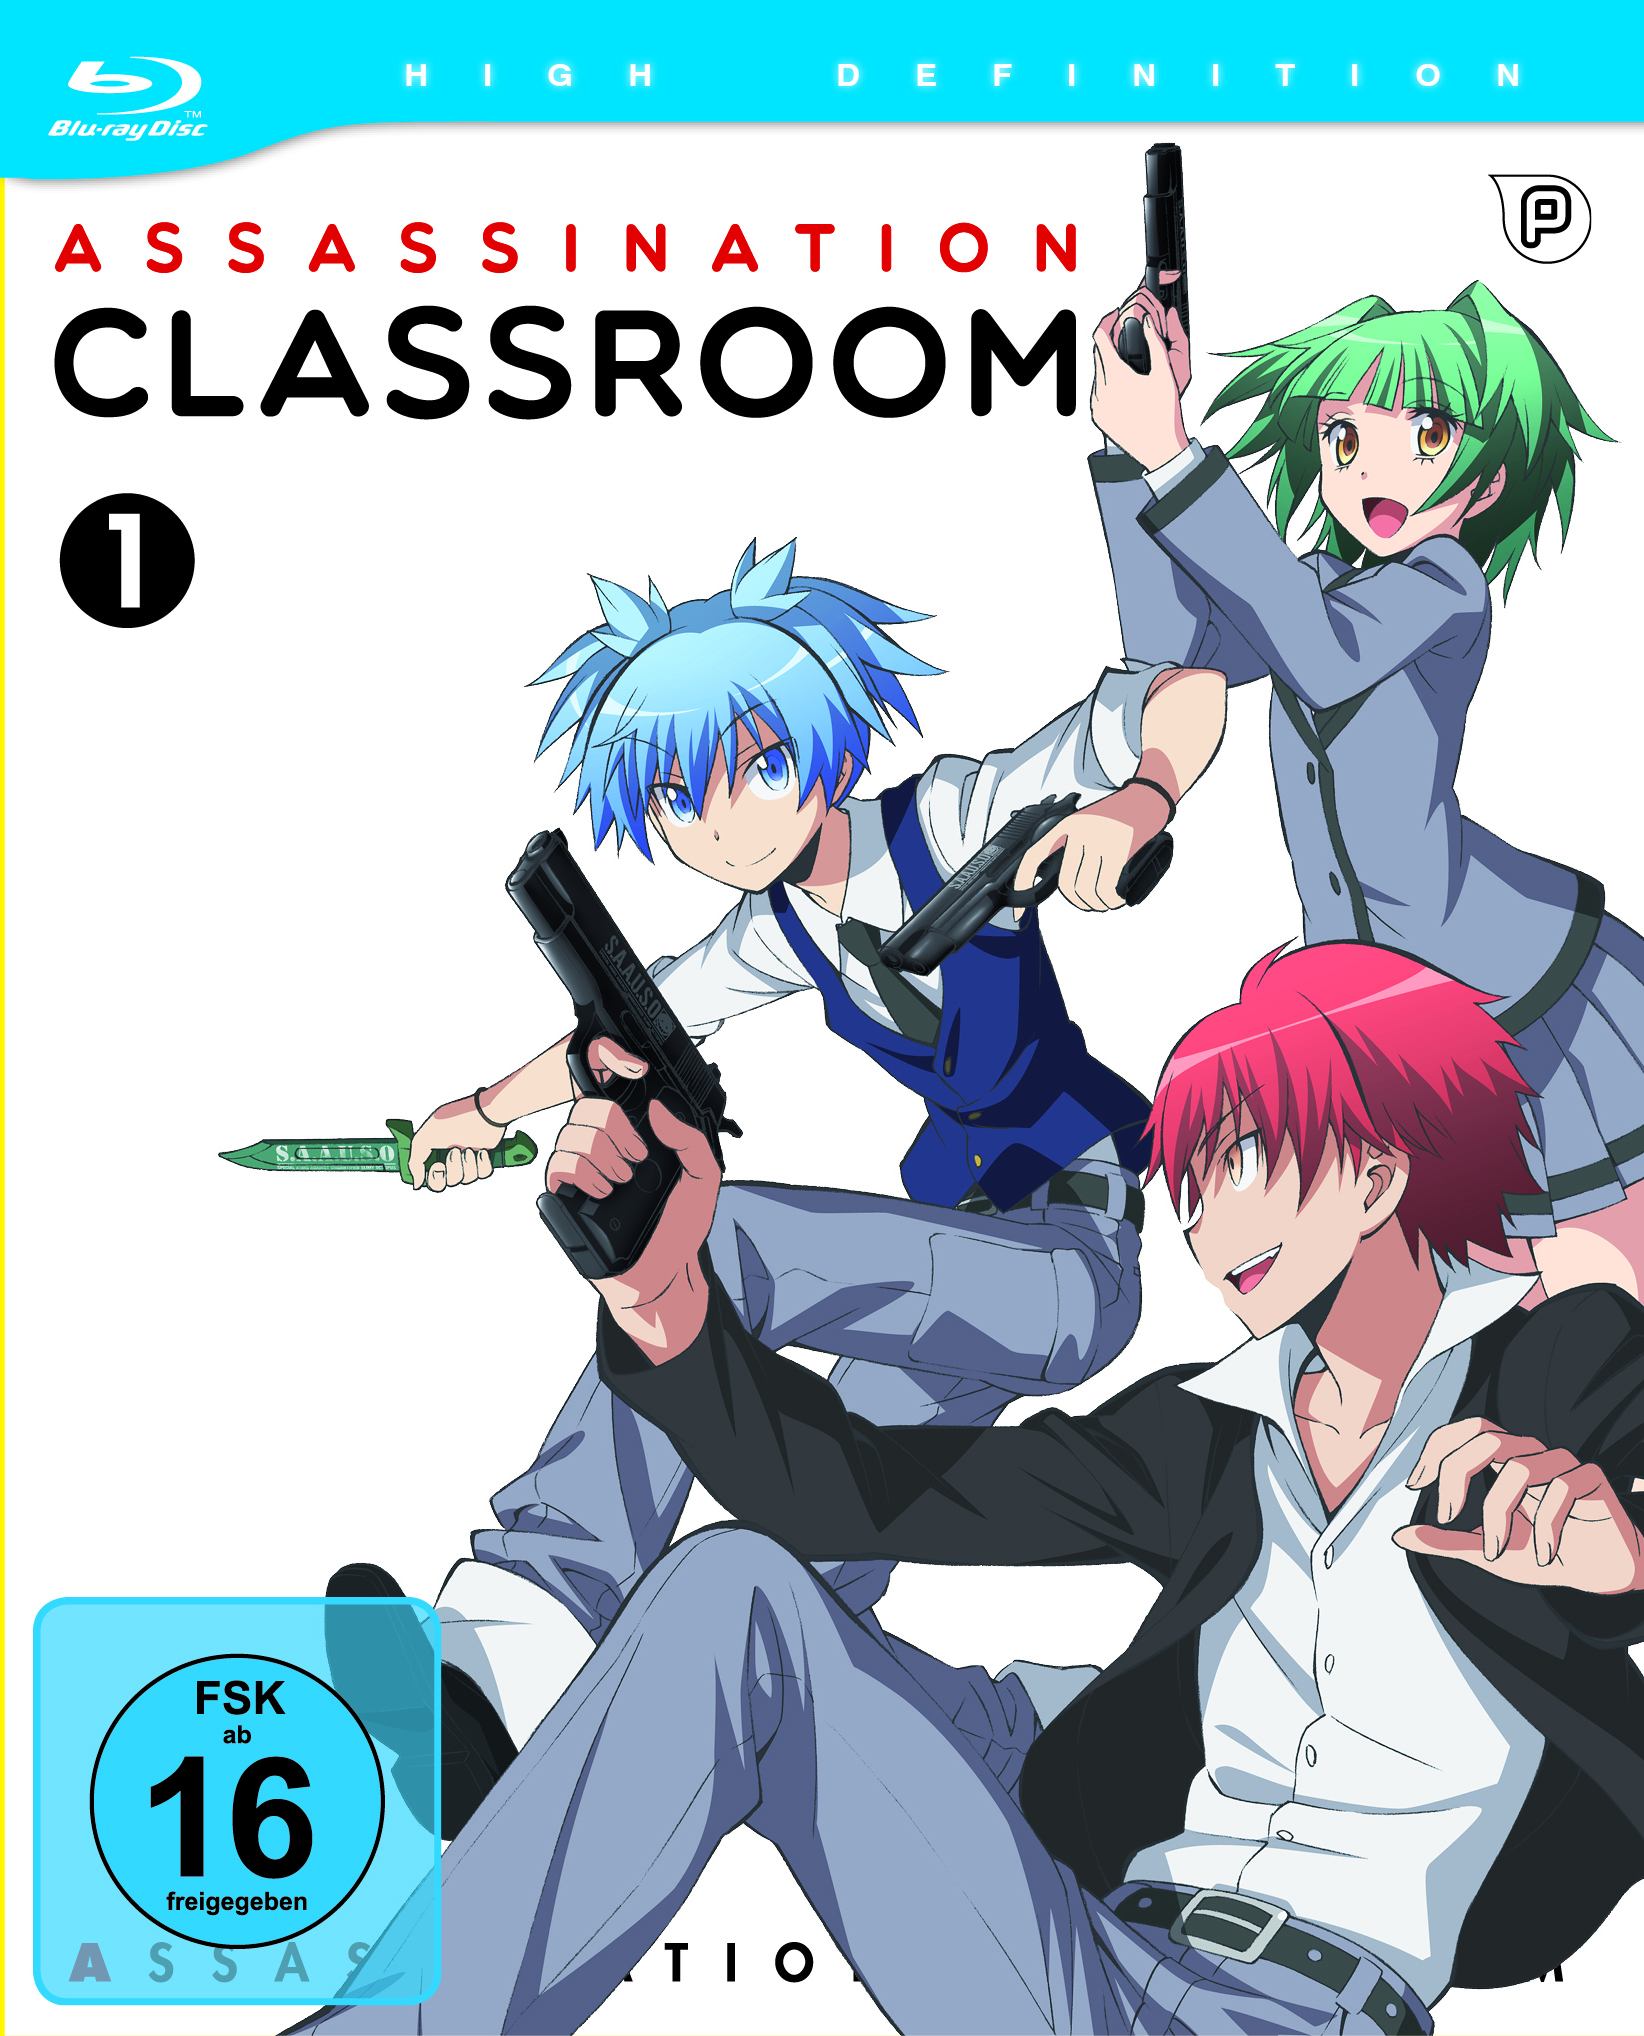 Gesehen: Assassination Classroom Vol. 1 (Bluray)